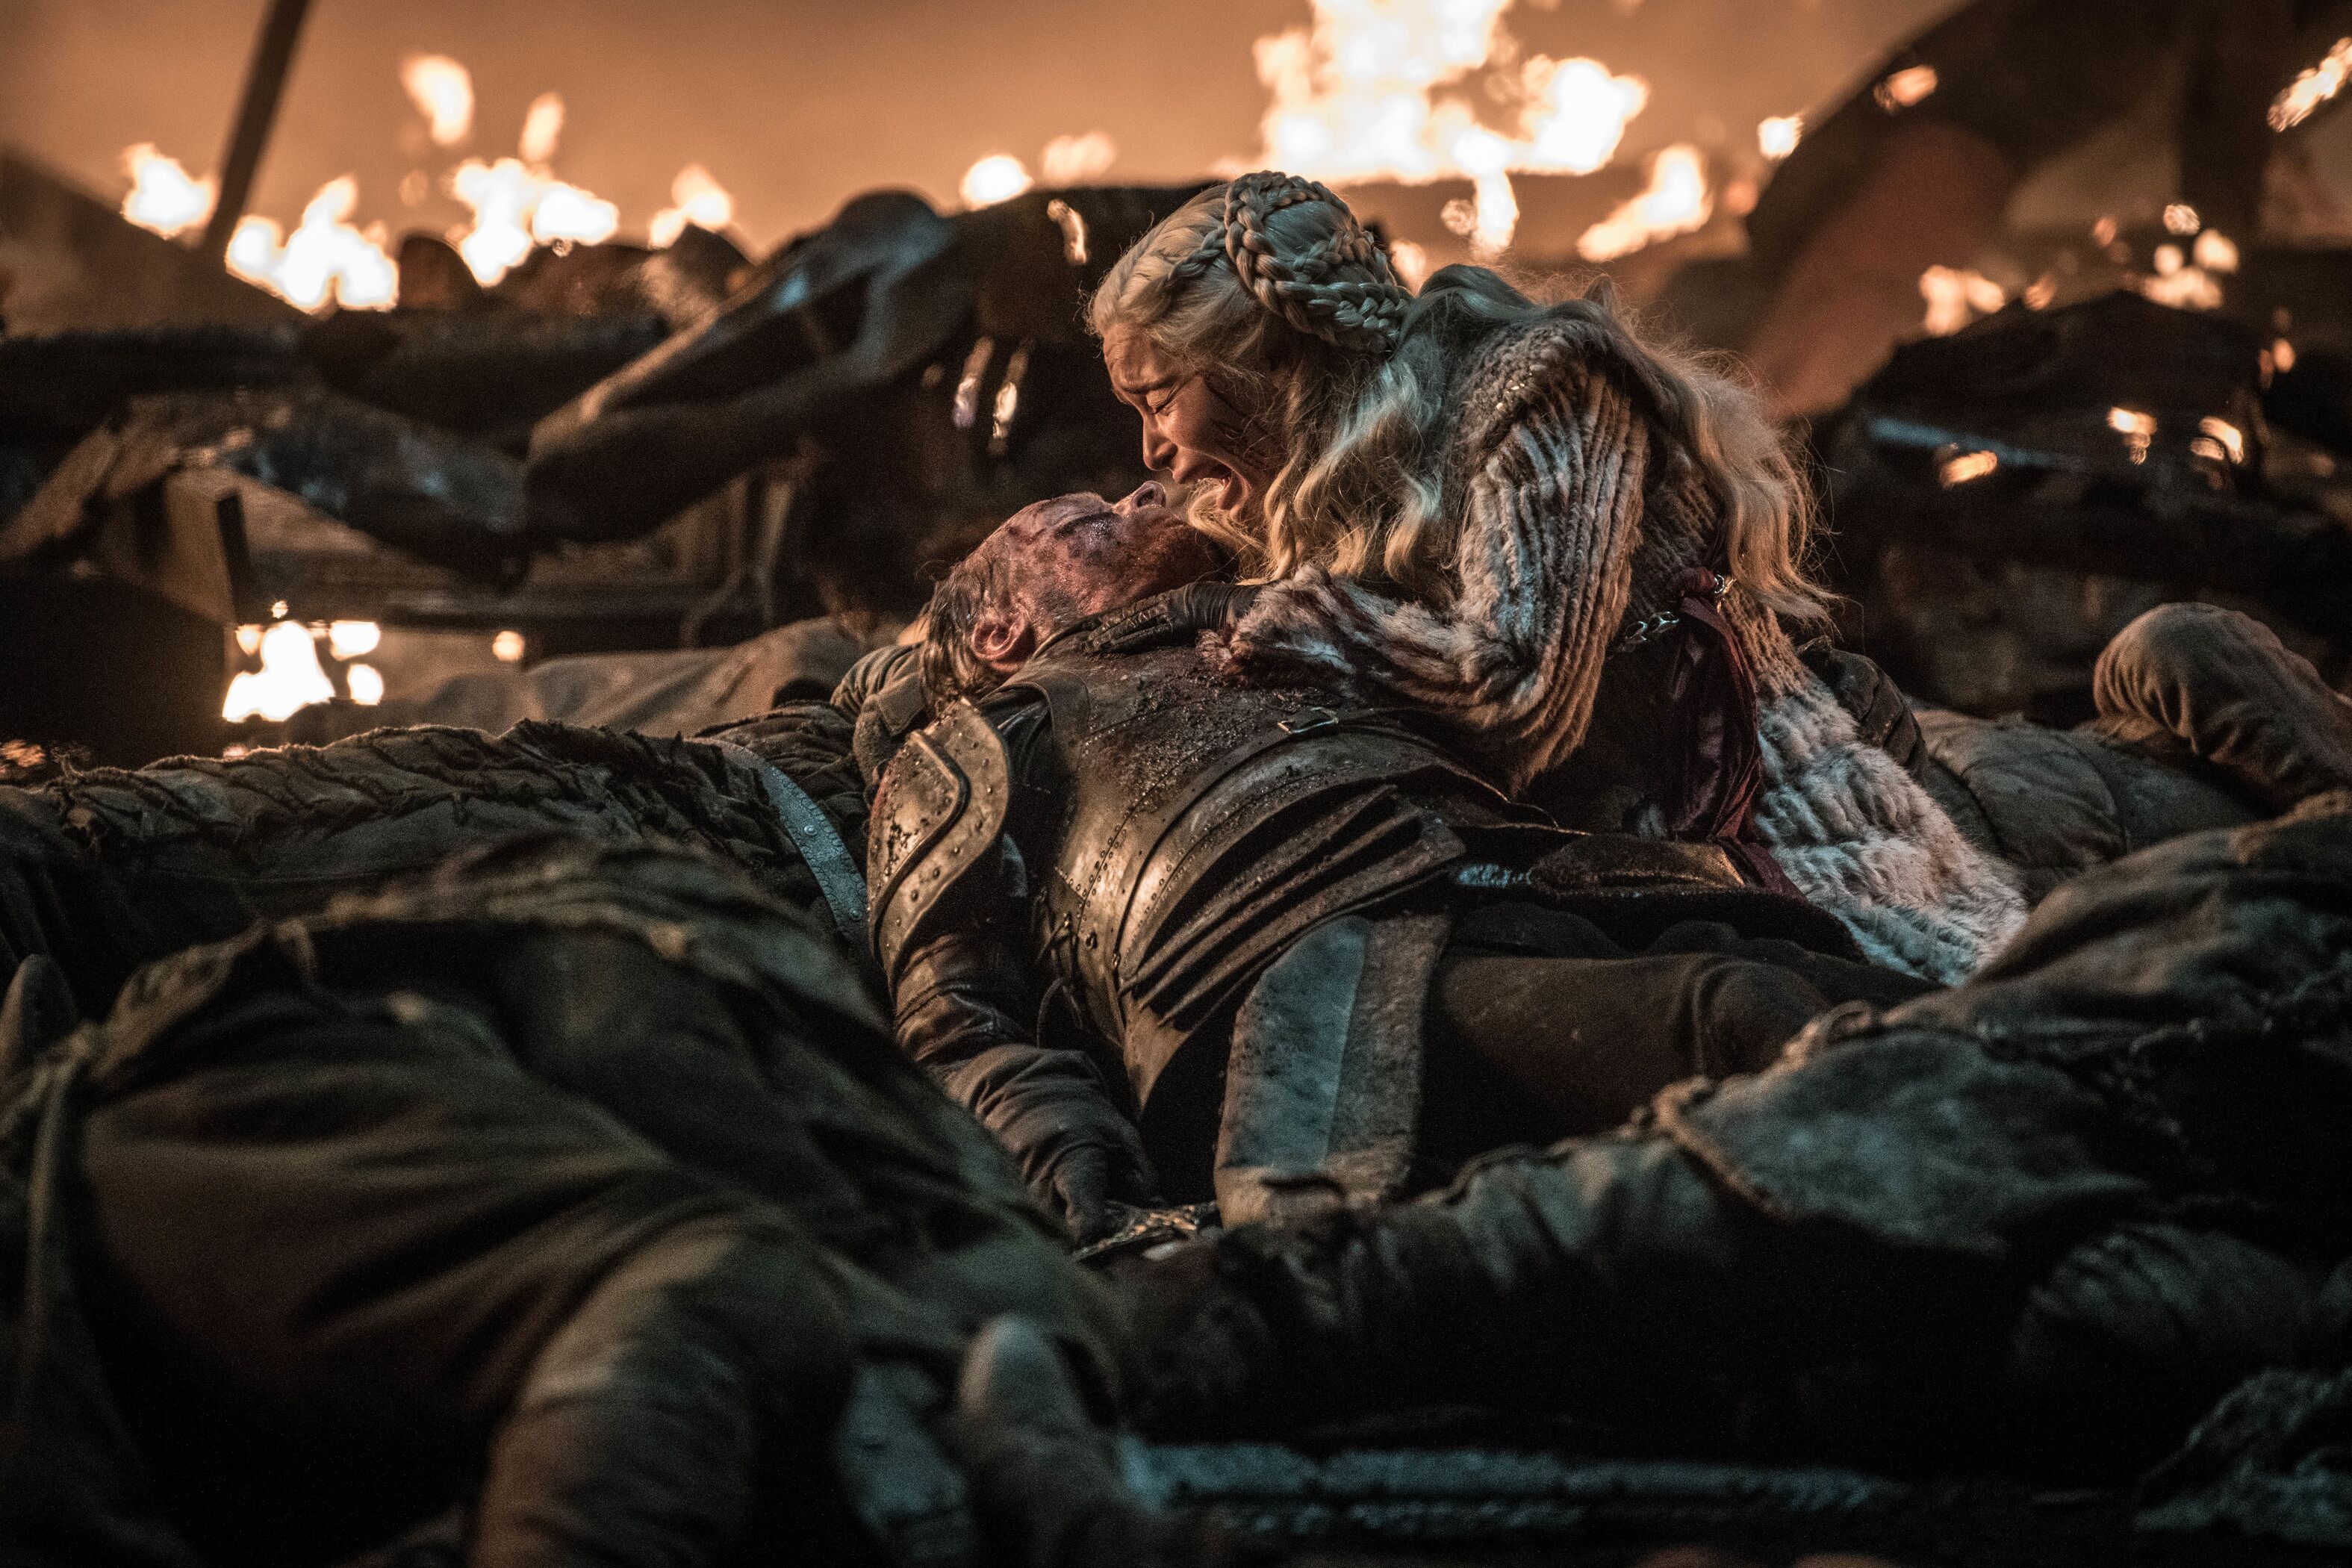 Iain Glen as Jorah Mormont and Emilia Clarke as Daenerys Targaryen (Helen Sloan—HBO)